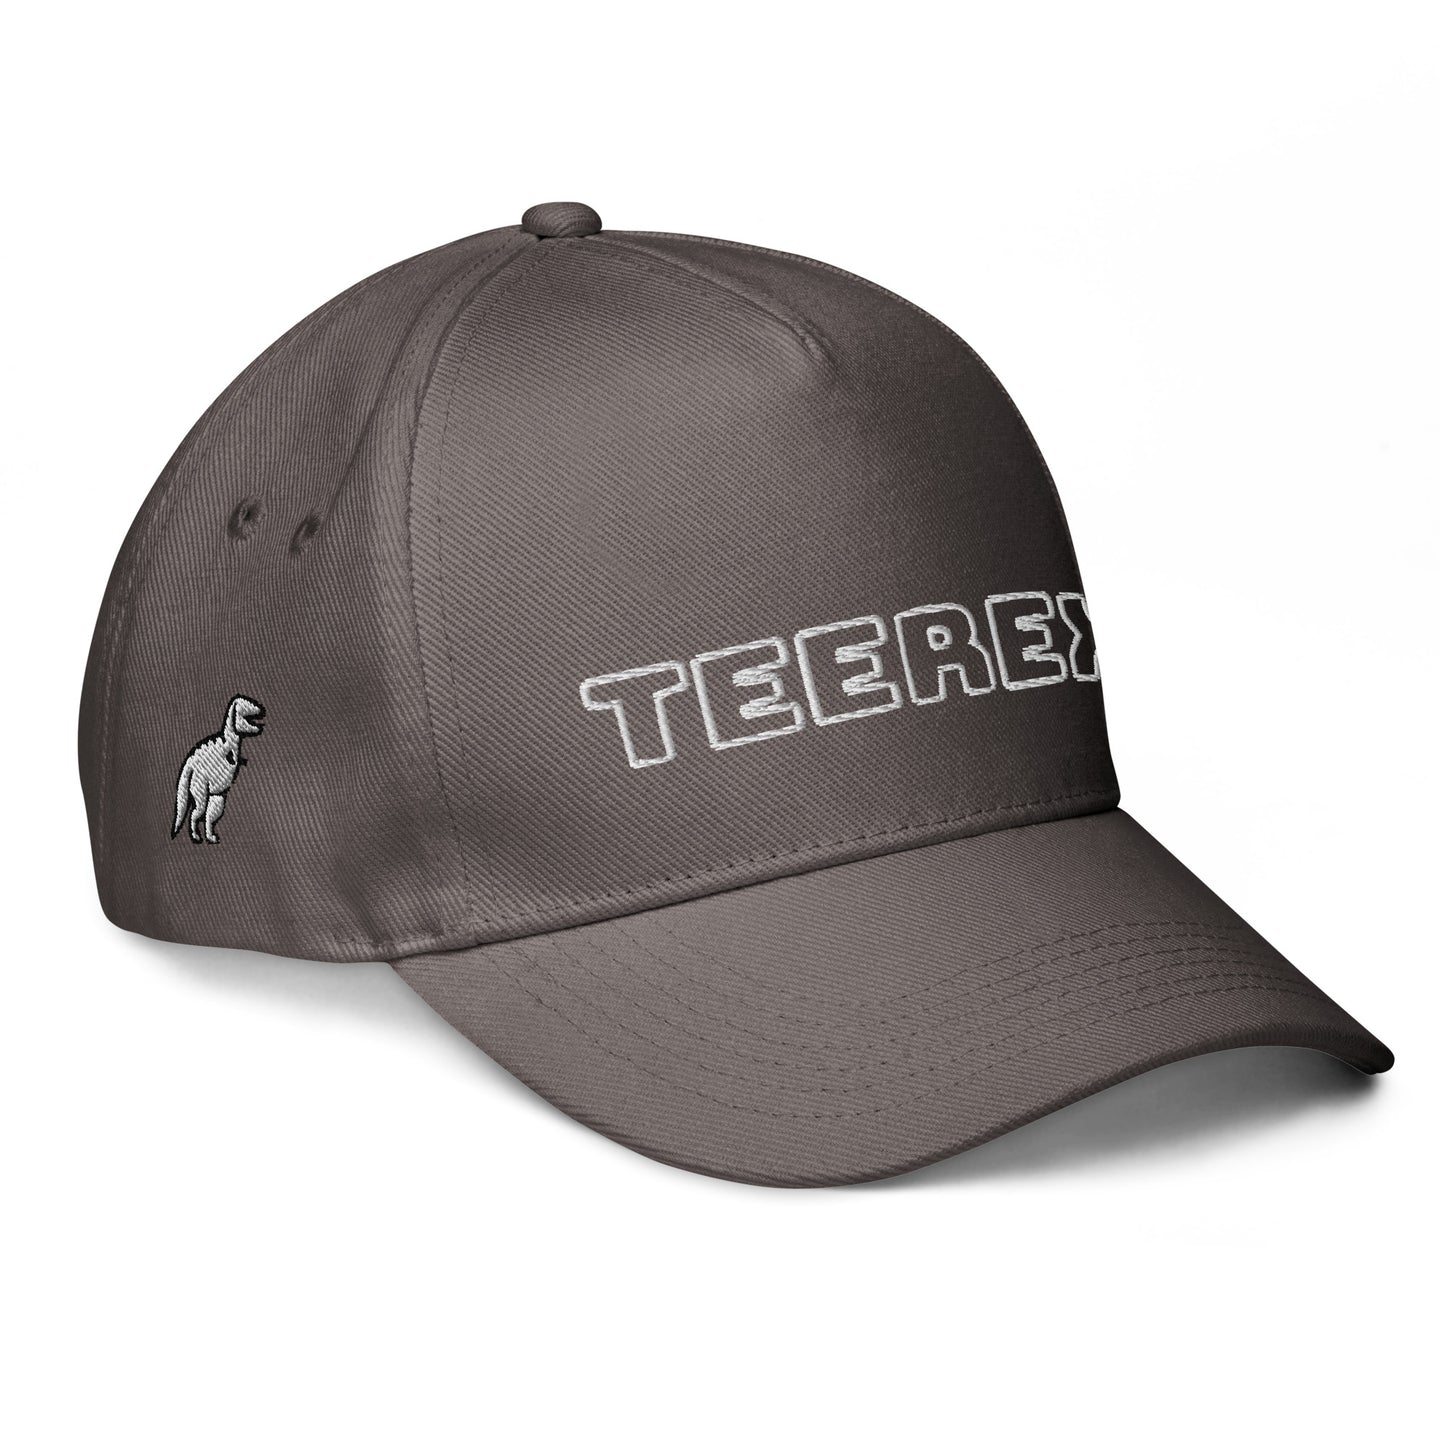 TeeRex Classic embroidered baseball cap